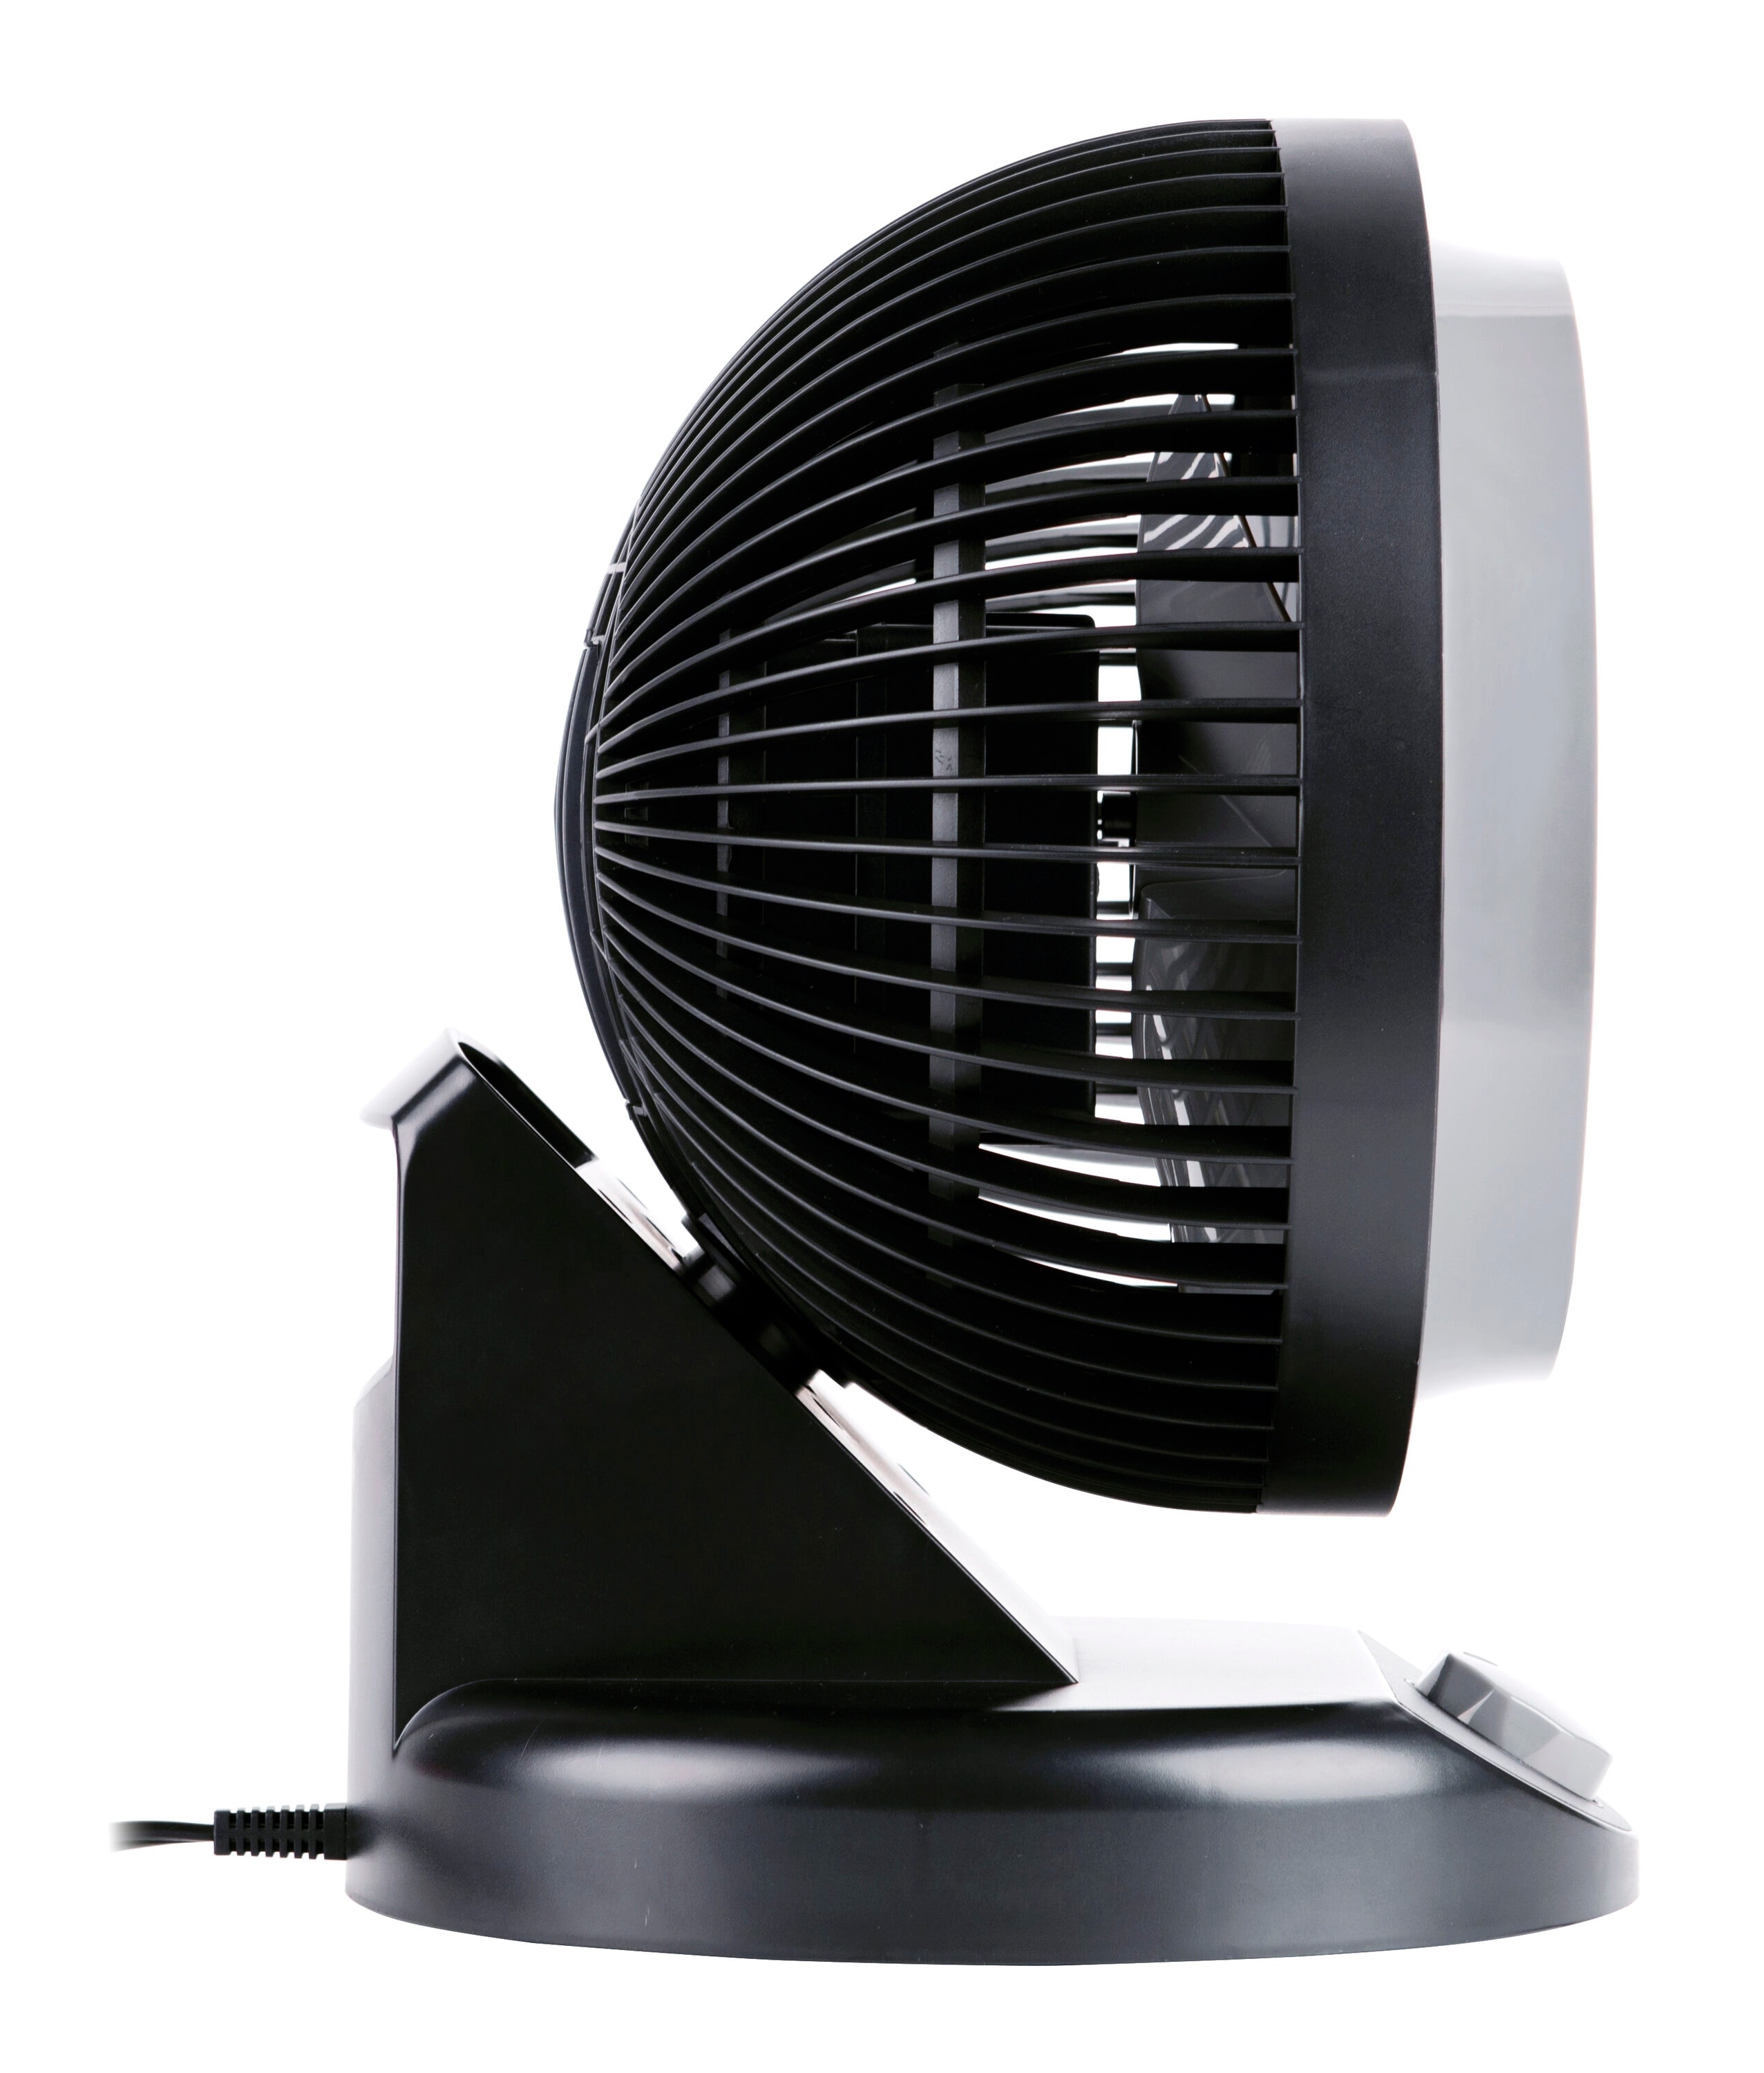 Ozeri 10-in 100-Volt 3-Speed Indoor Gray Oscillating Desk Fan in 